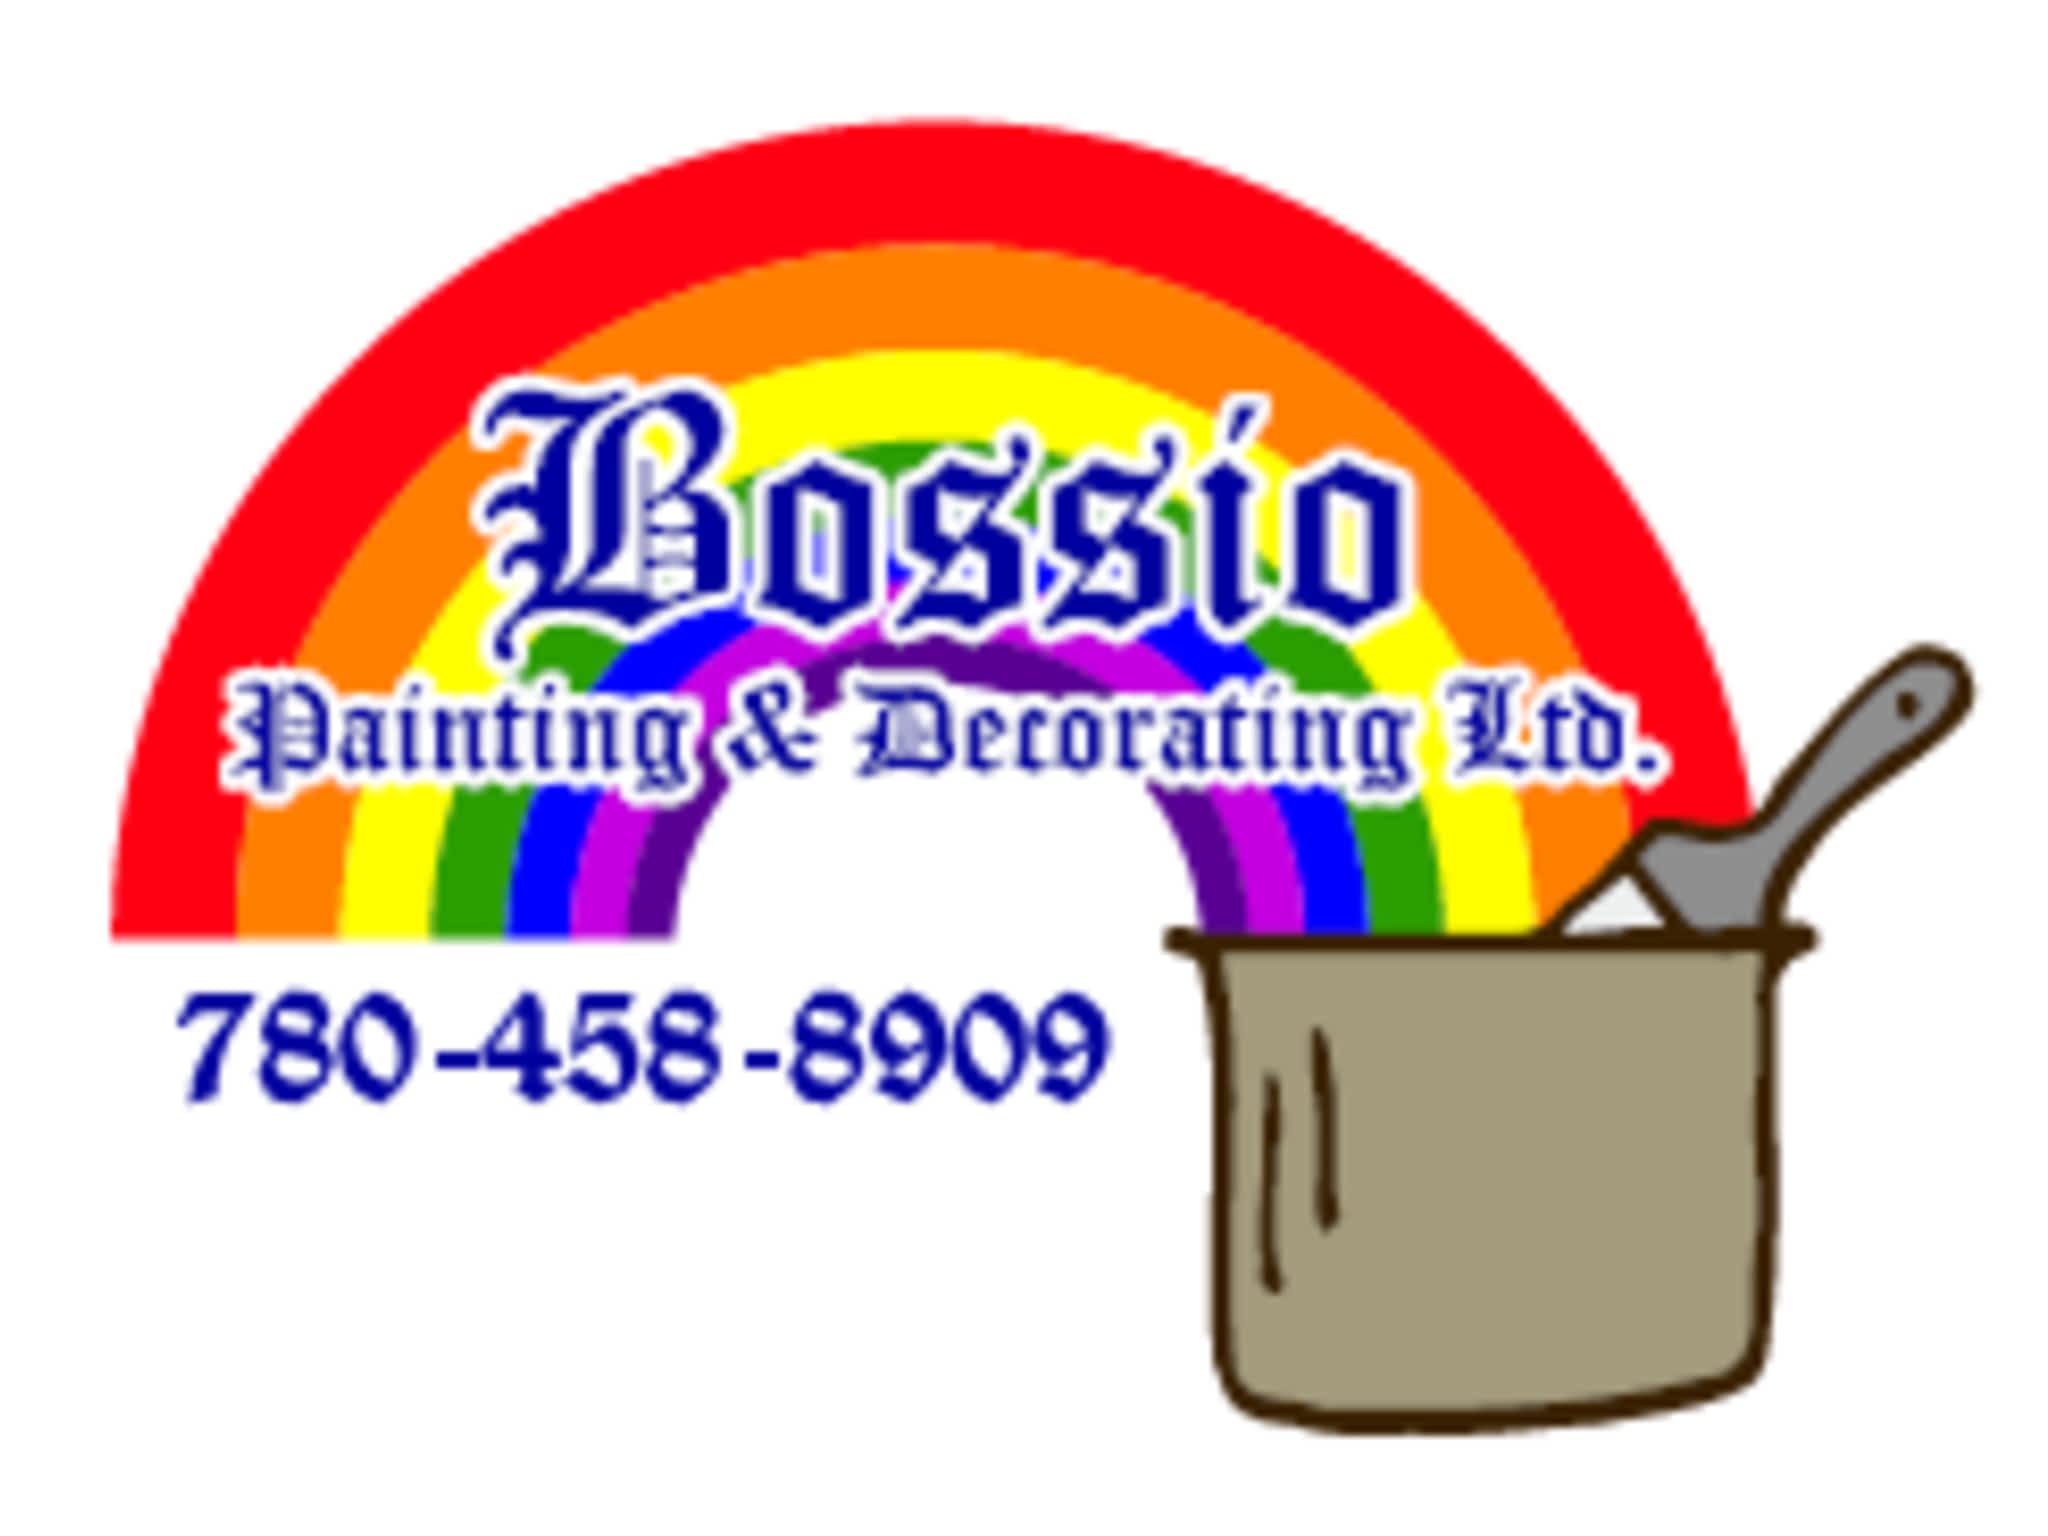 photo Bossio Painting & Decorating Ltd